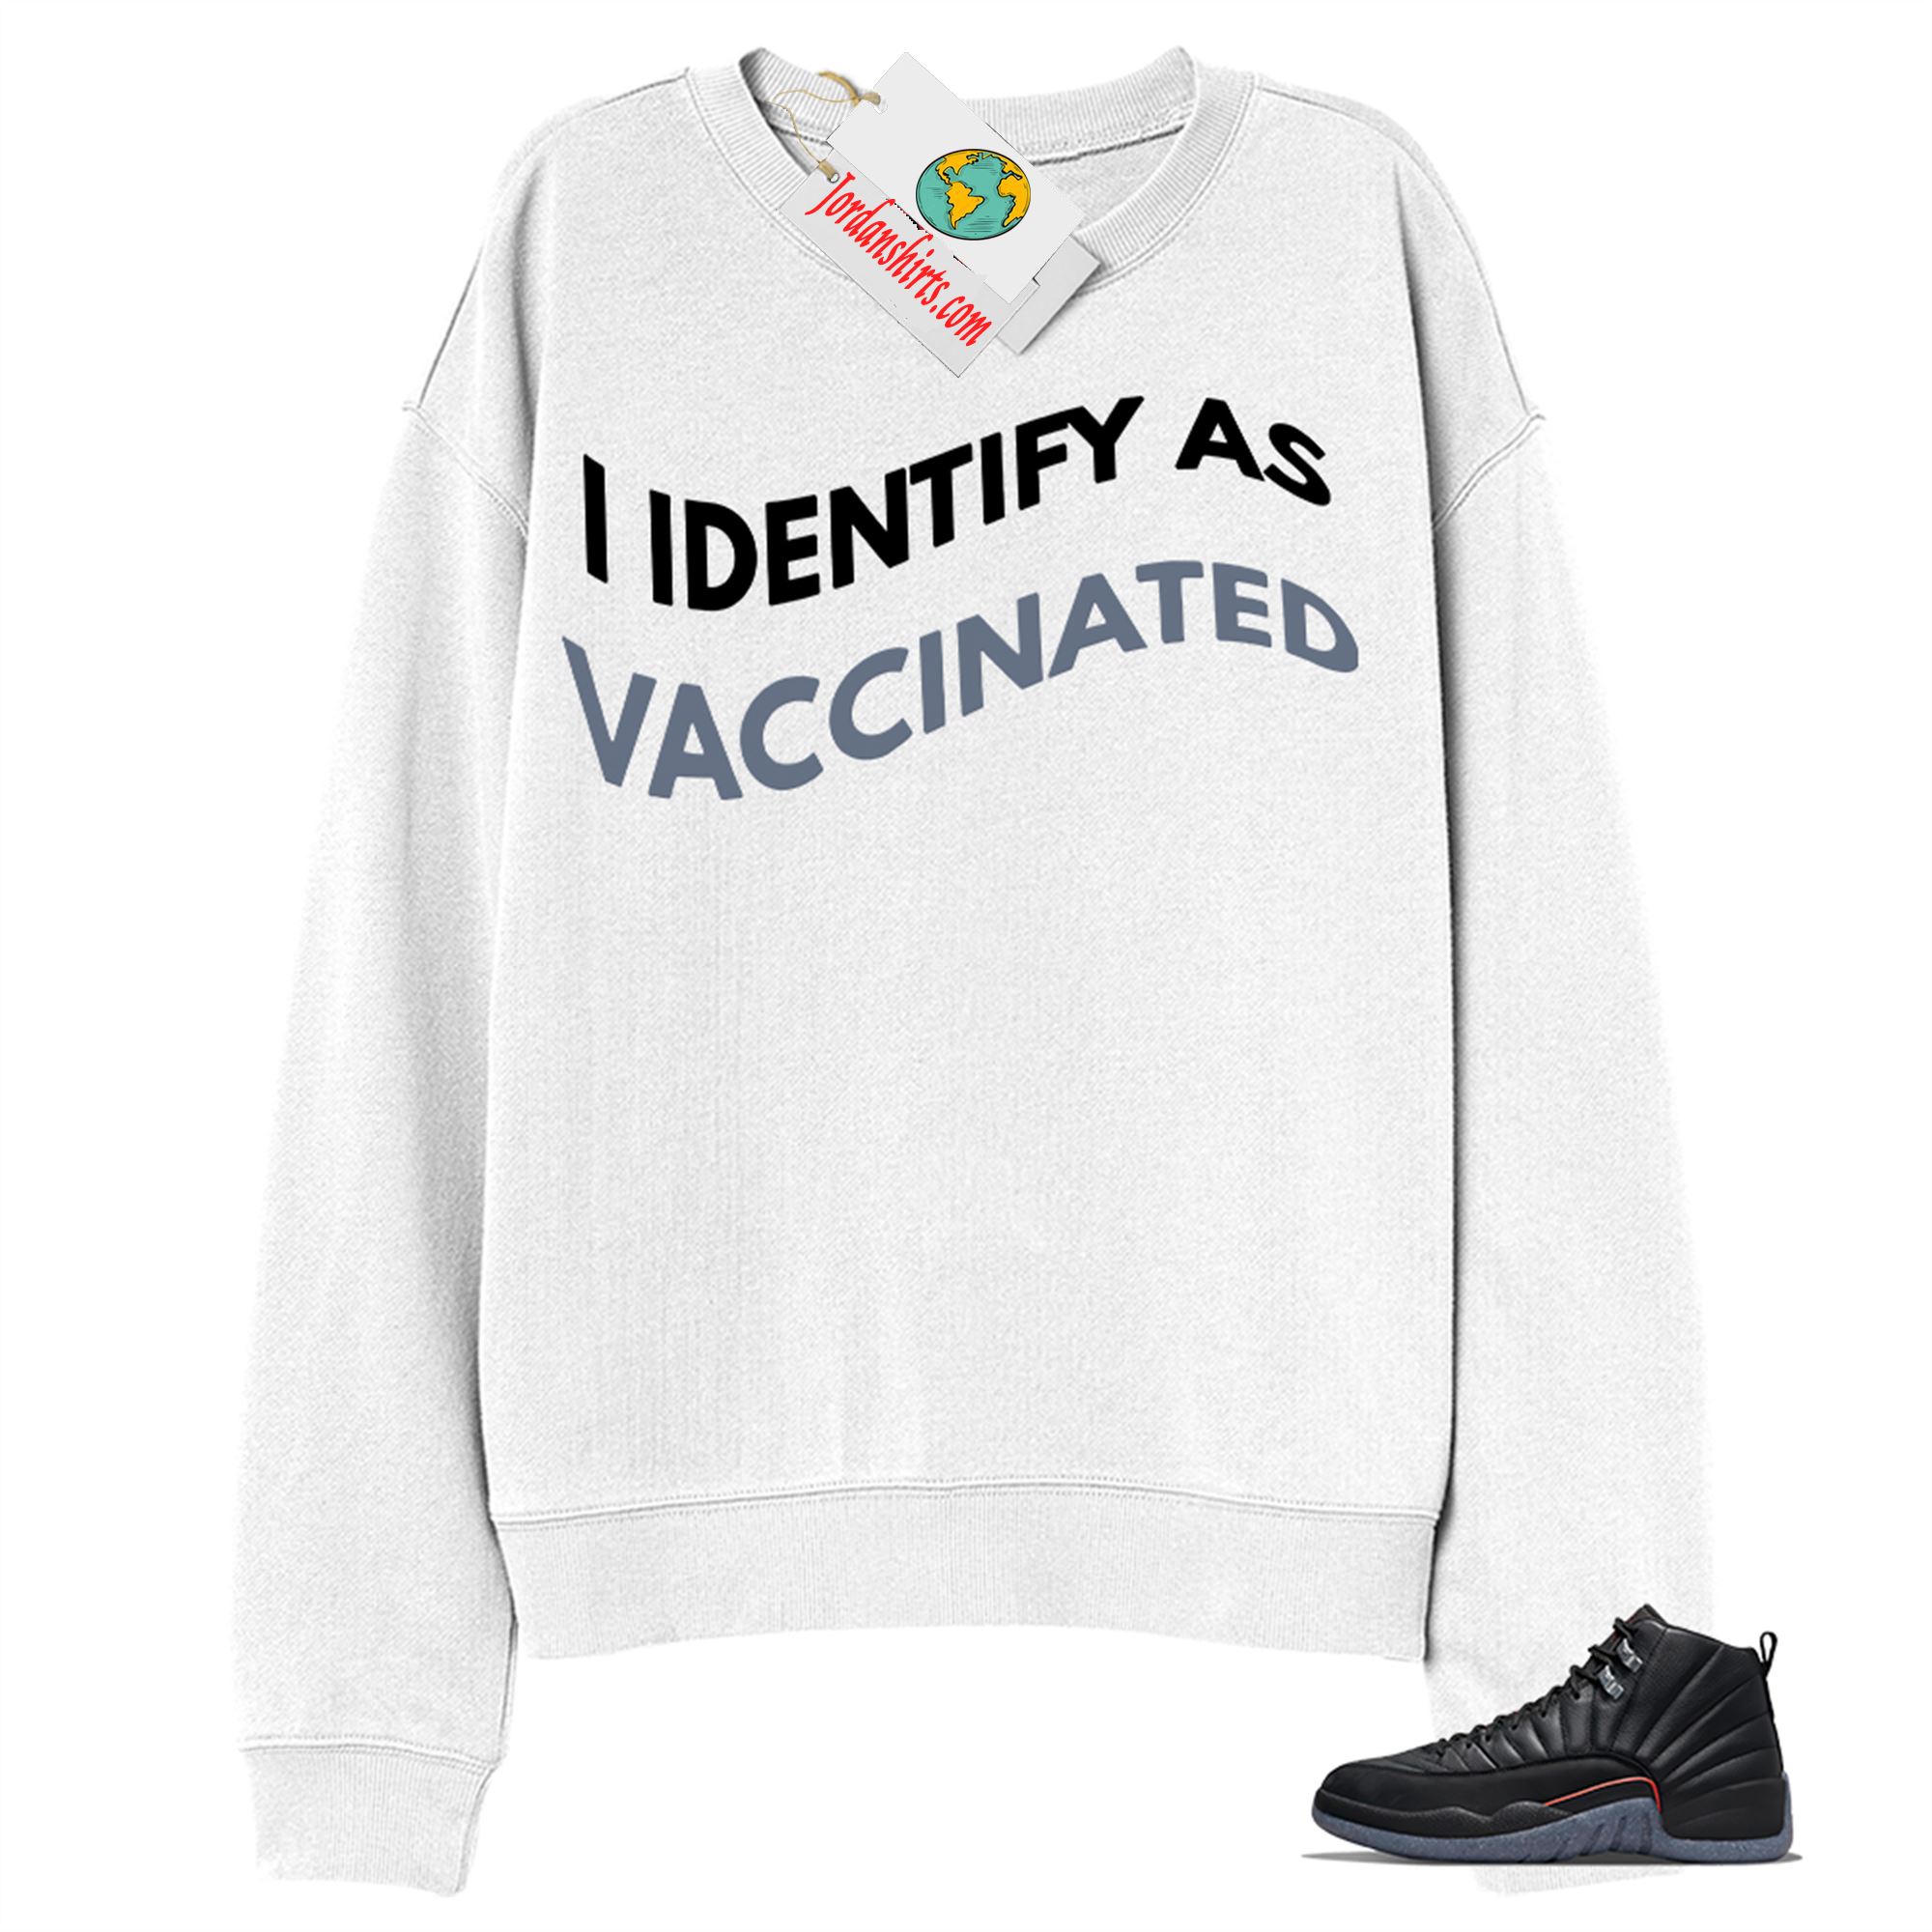 Jordan 12 Sweatshirt, I Identify As Vaccinated White Sweatshirt Air Jordan 12 Utility Grind 12s Size Up To 5xl